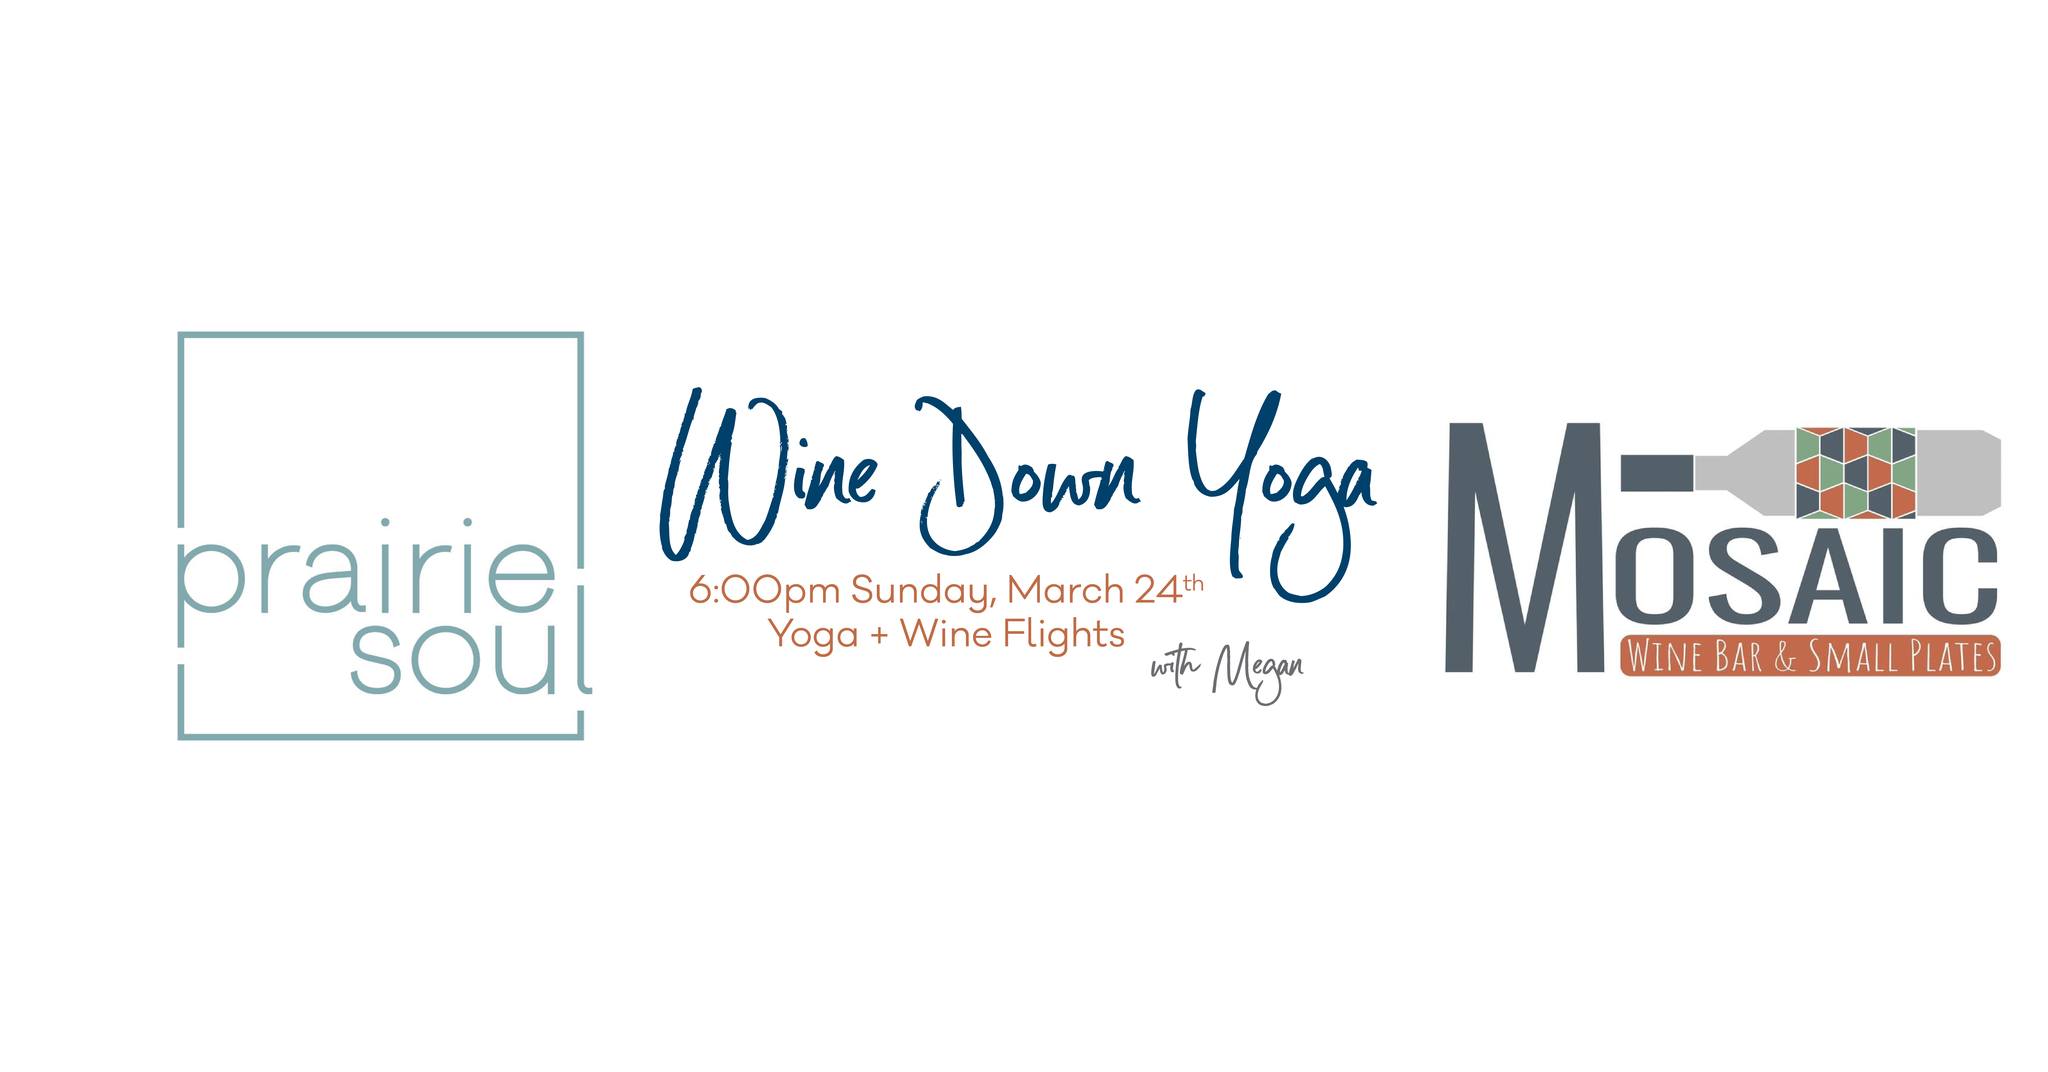 Wine Down Yoga @ Mosaic